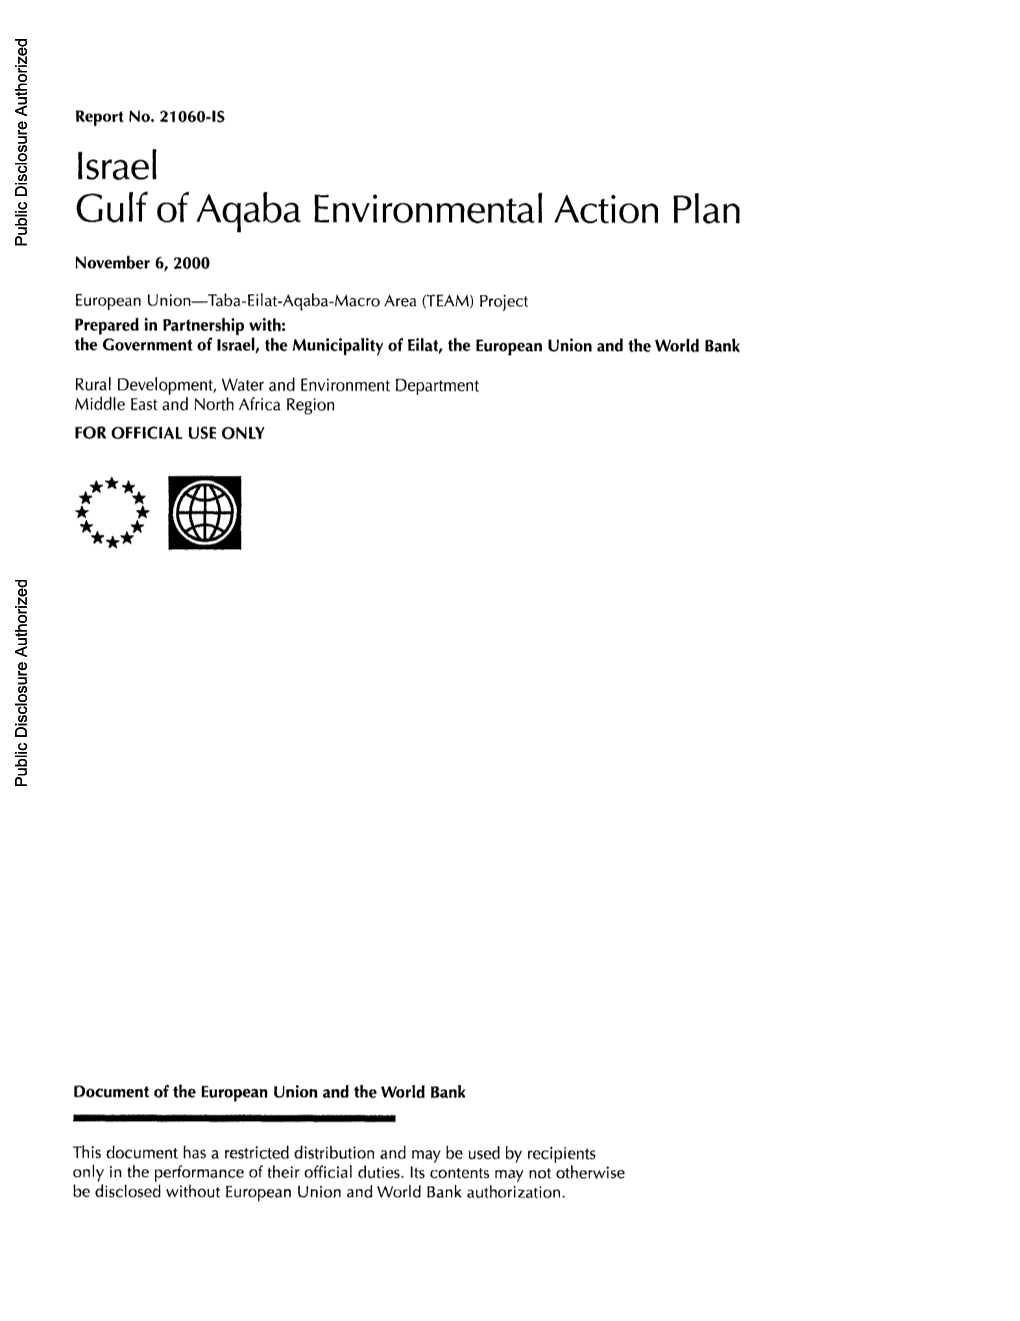 Israel Gulf of Aqabaenvironmental Action Plan Public Disclosure Authorized November6, 2000